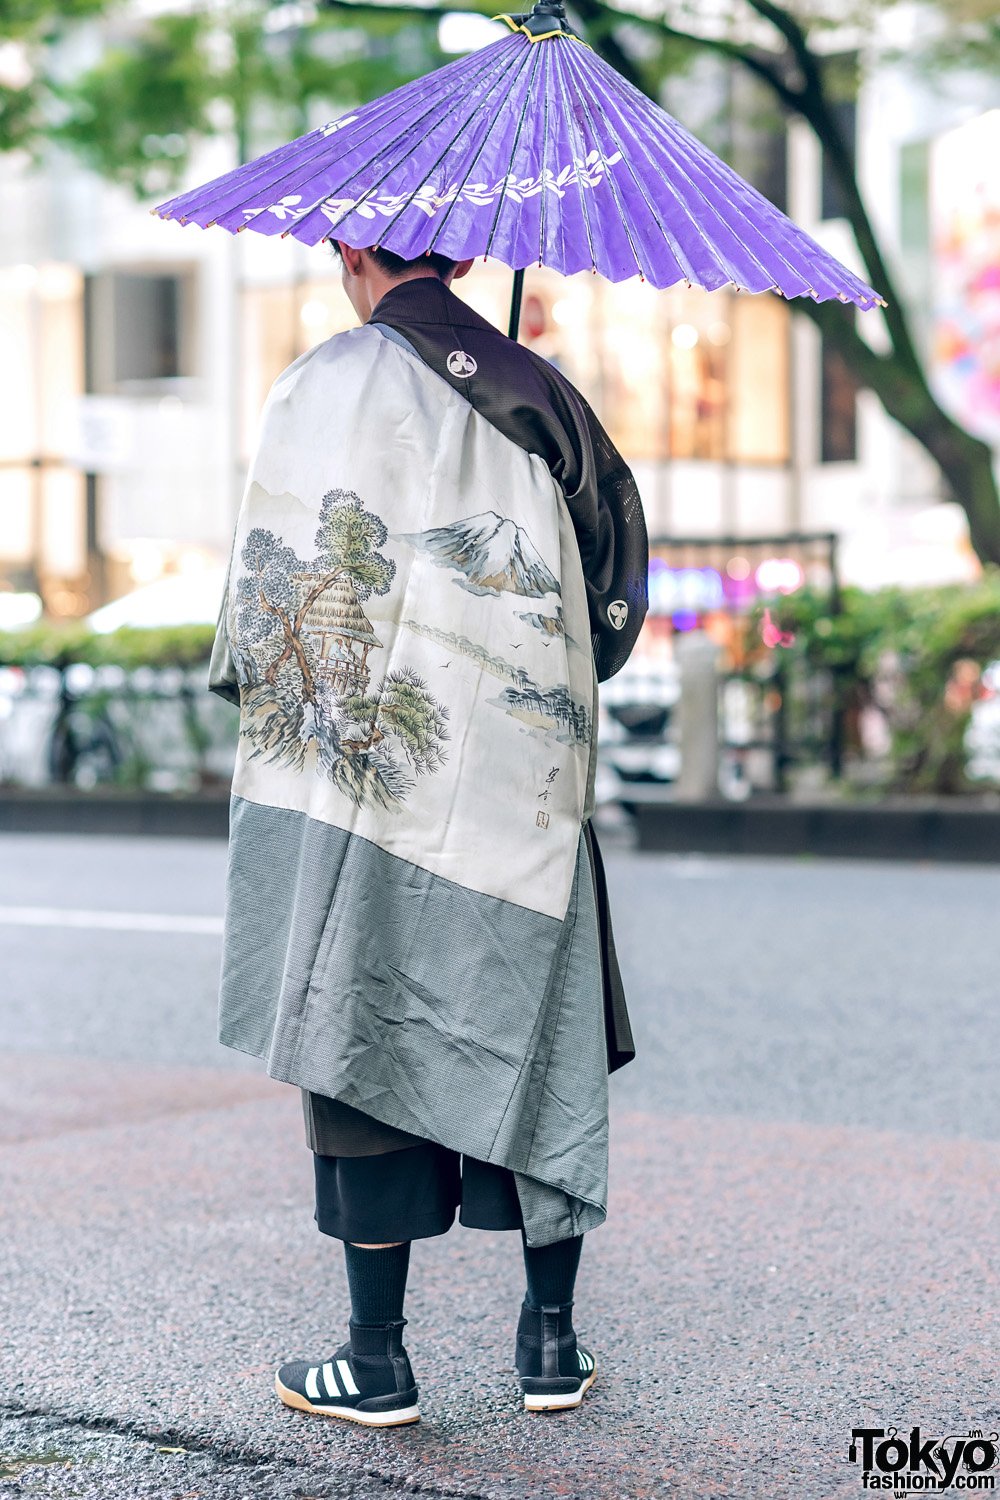 Tokyo Fashion on X: "21-year-old Yuki on the street in Harajuku mixing traditional Japanese fashion with modern streetwear. His look includes layered vintage kimono and wagasa umbrella, Lui's setup, and sock